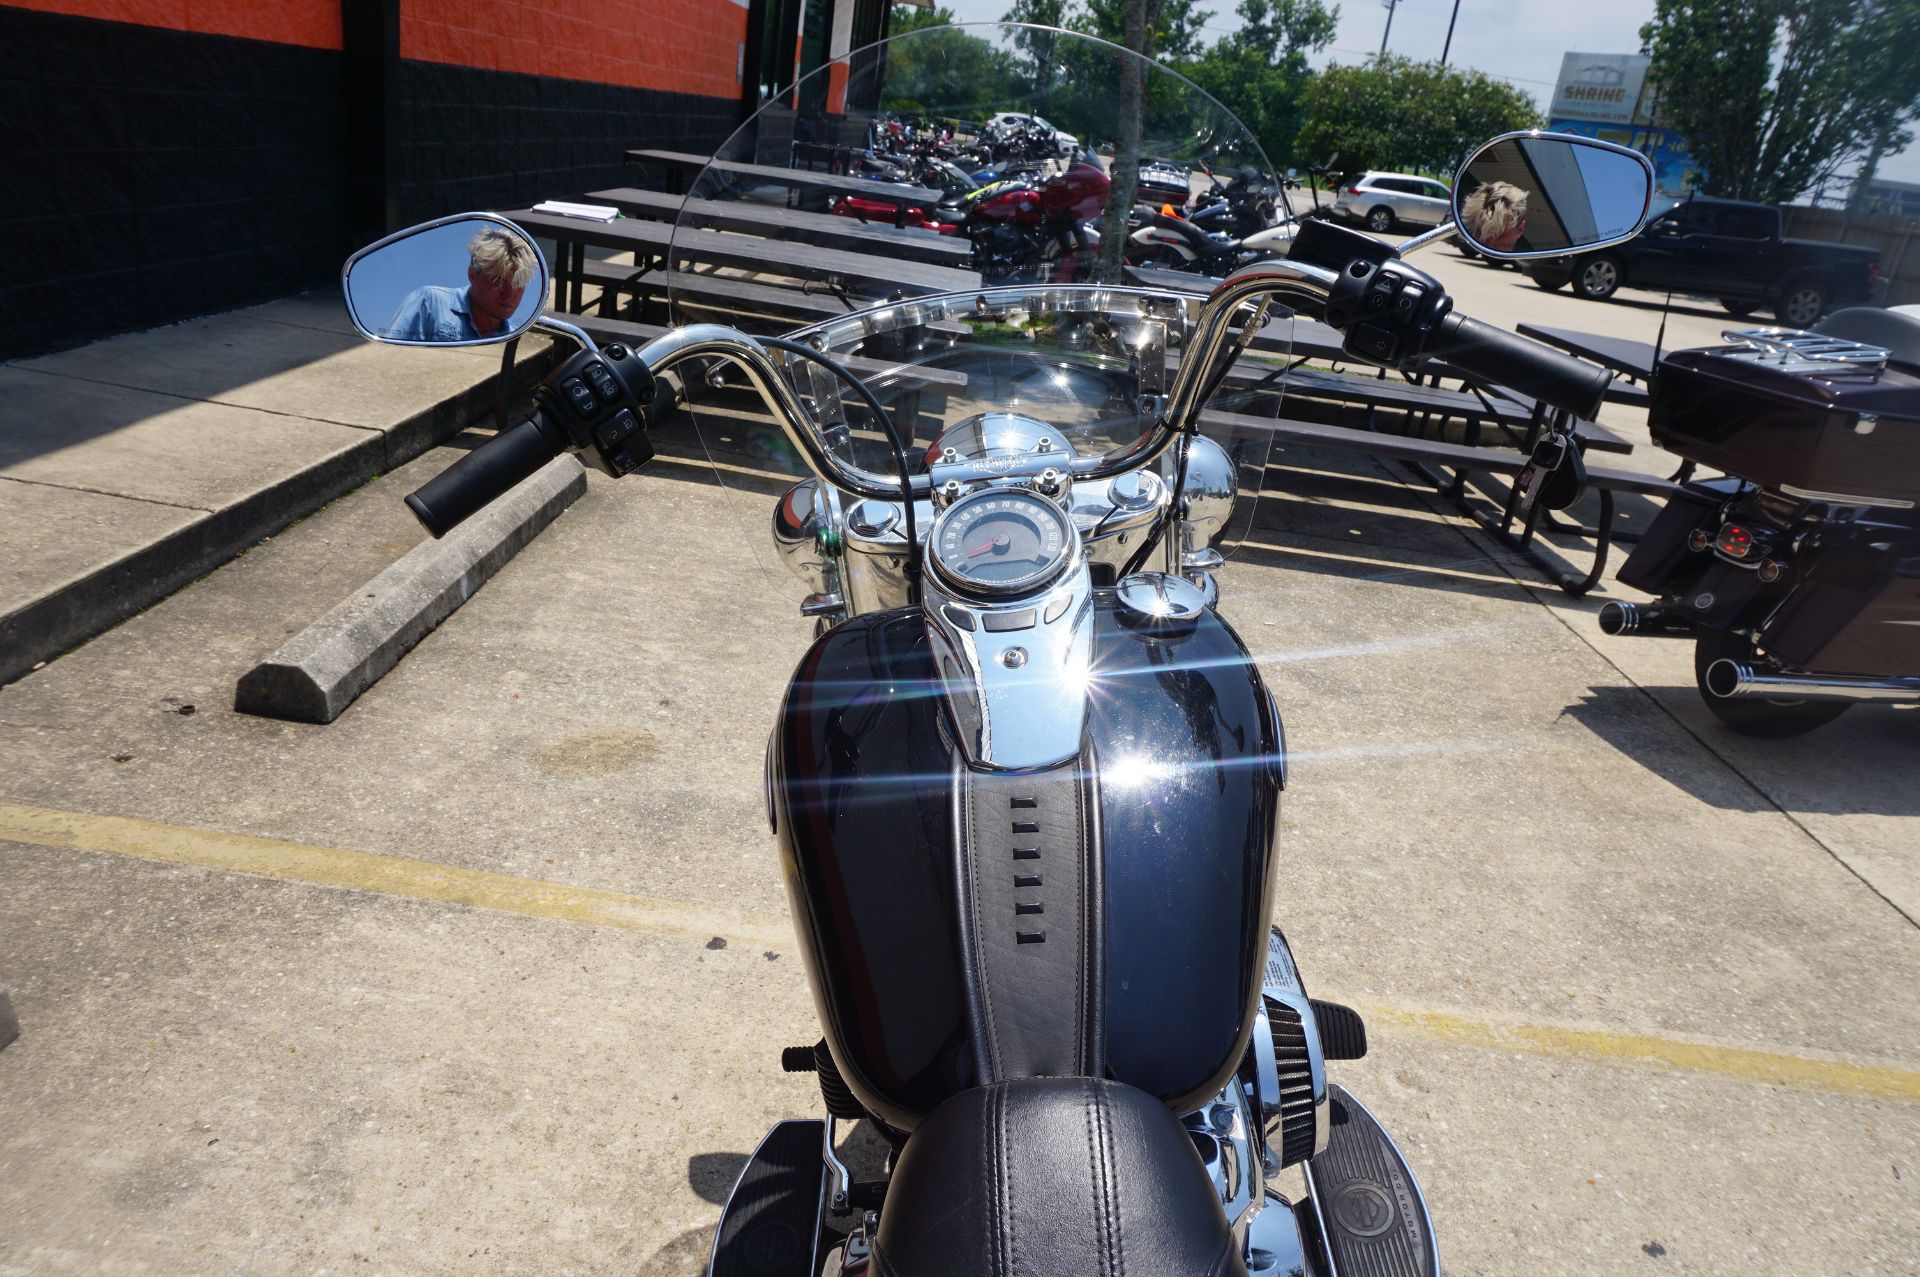 2022 Harley-Davidson Heritage Classic 114 in Metairie, Louisiana - Photo 13